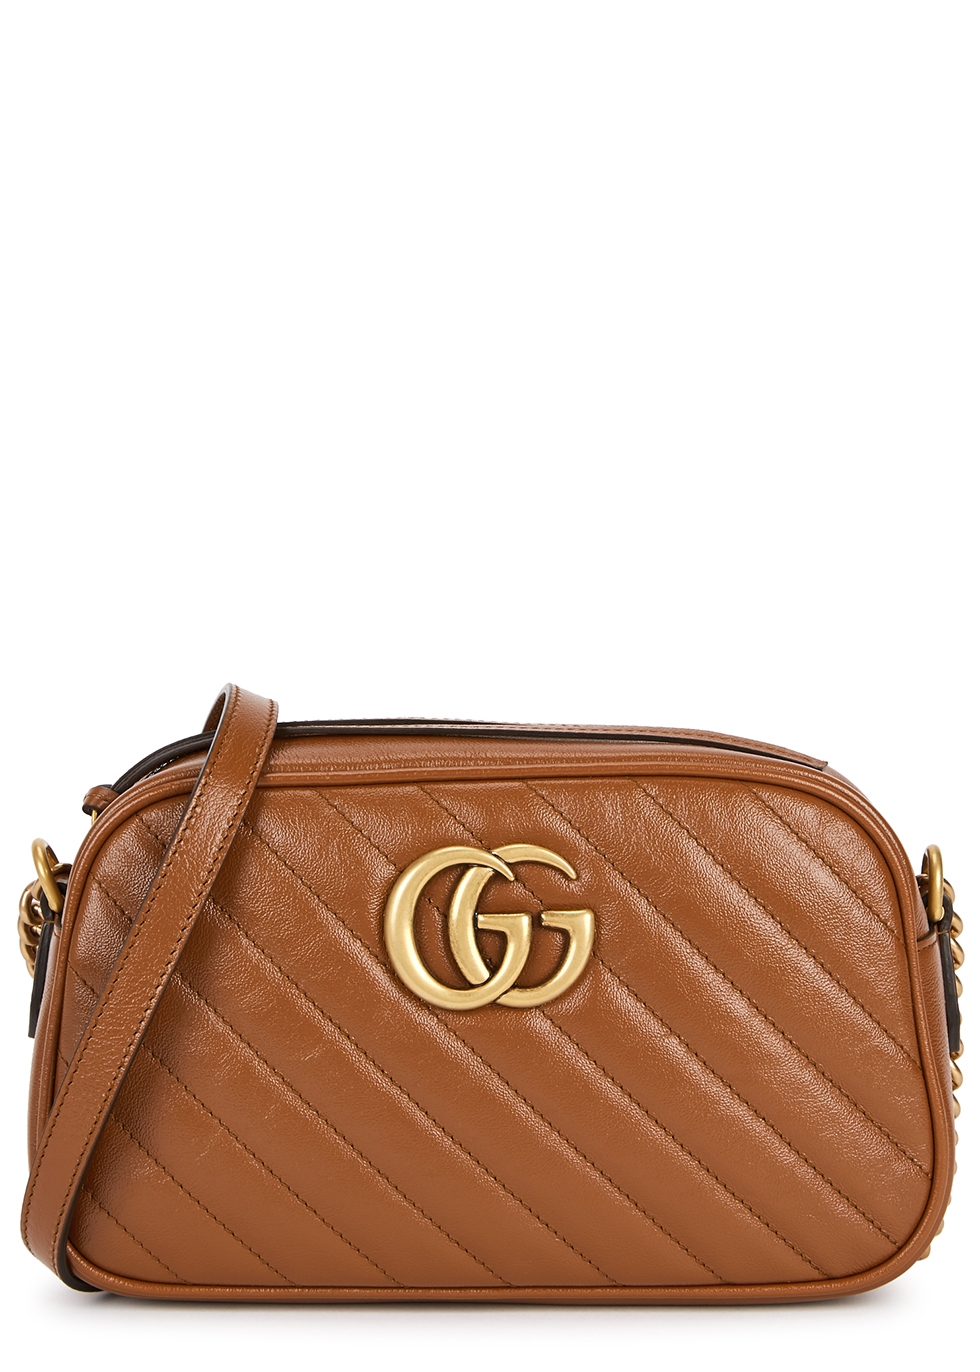 gg leather bag